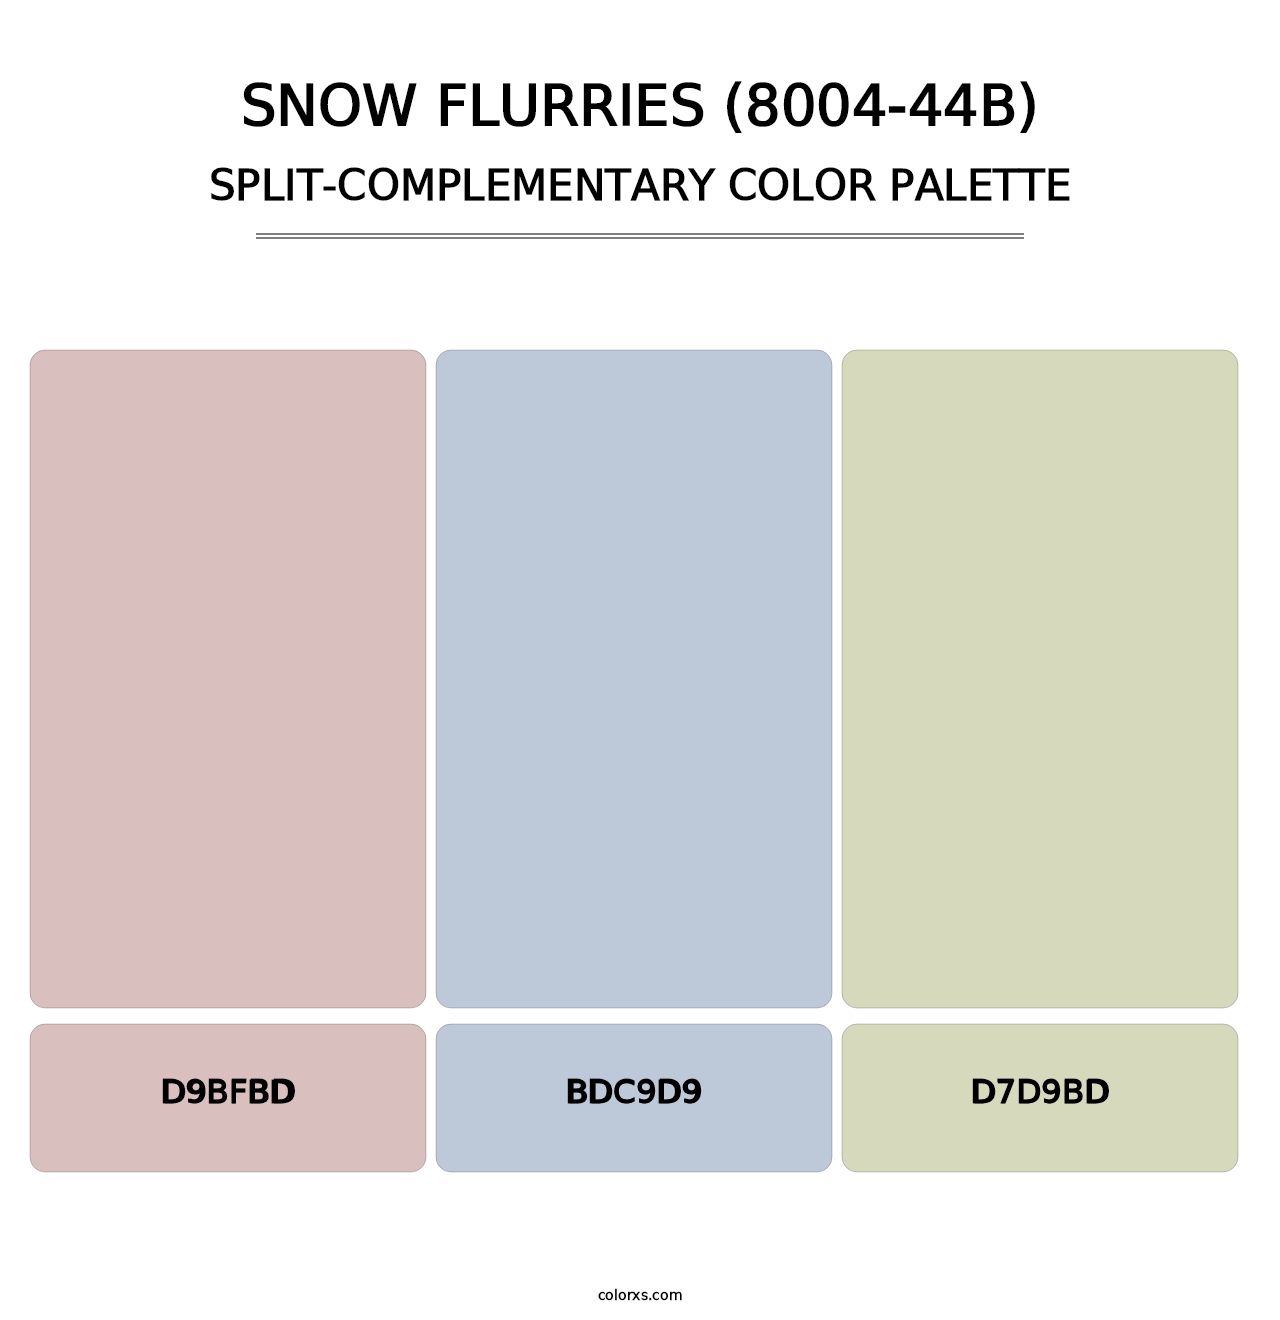 Snow Flurries (8004-44B) - Split-Complementary Color Palette